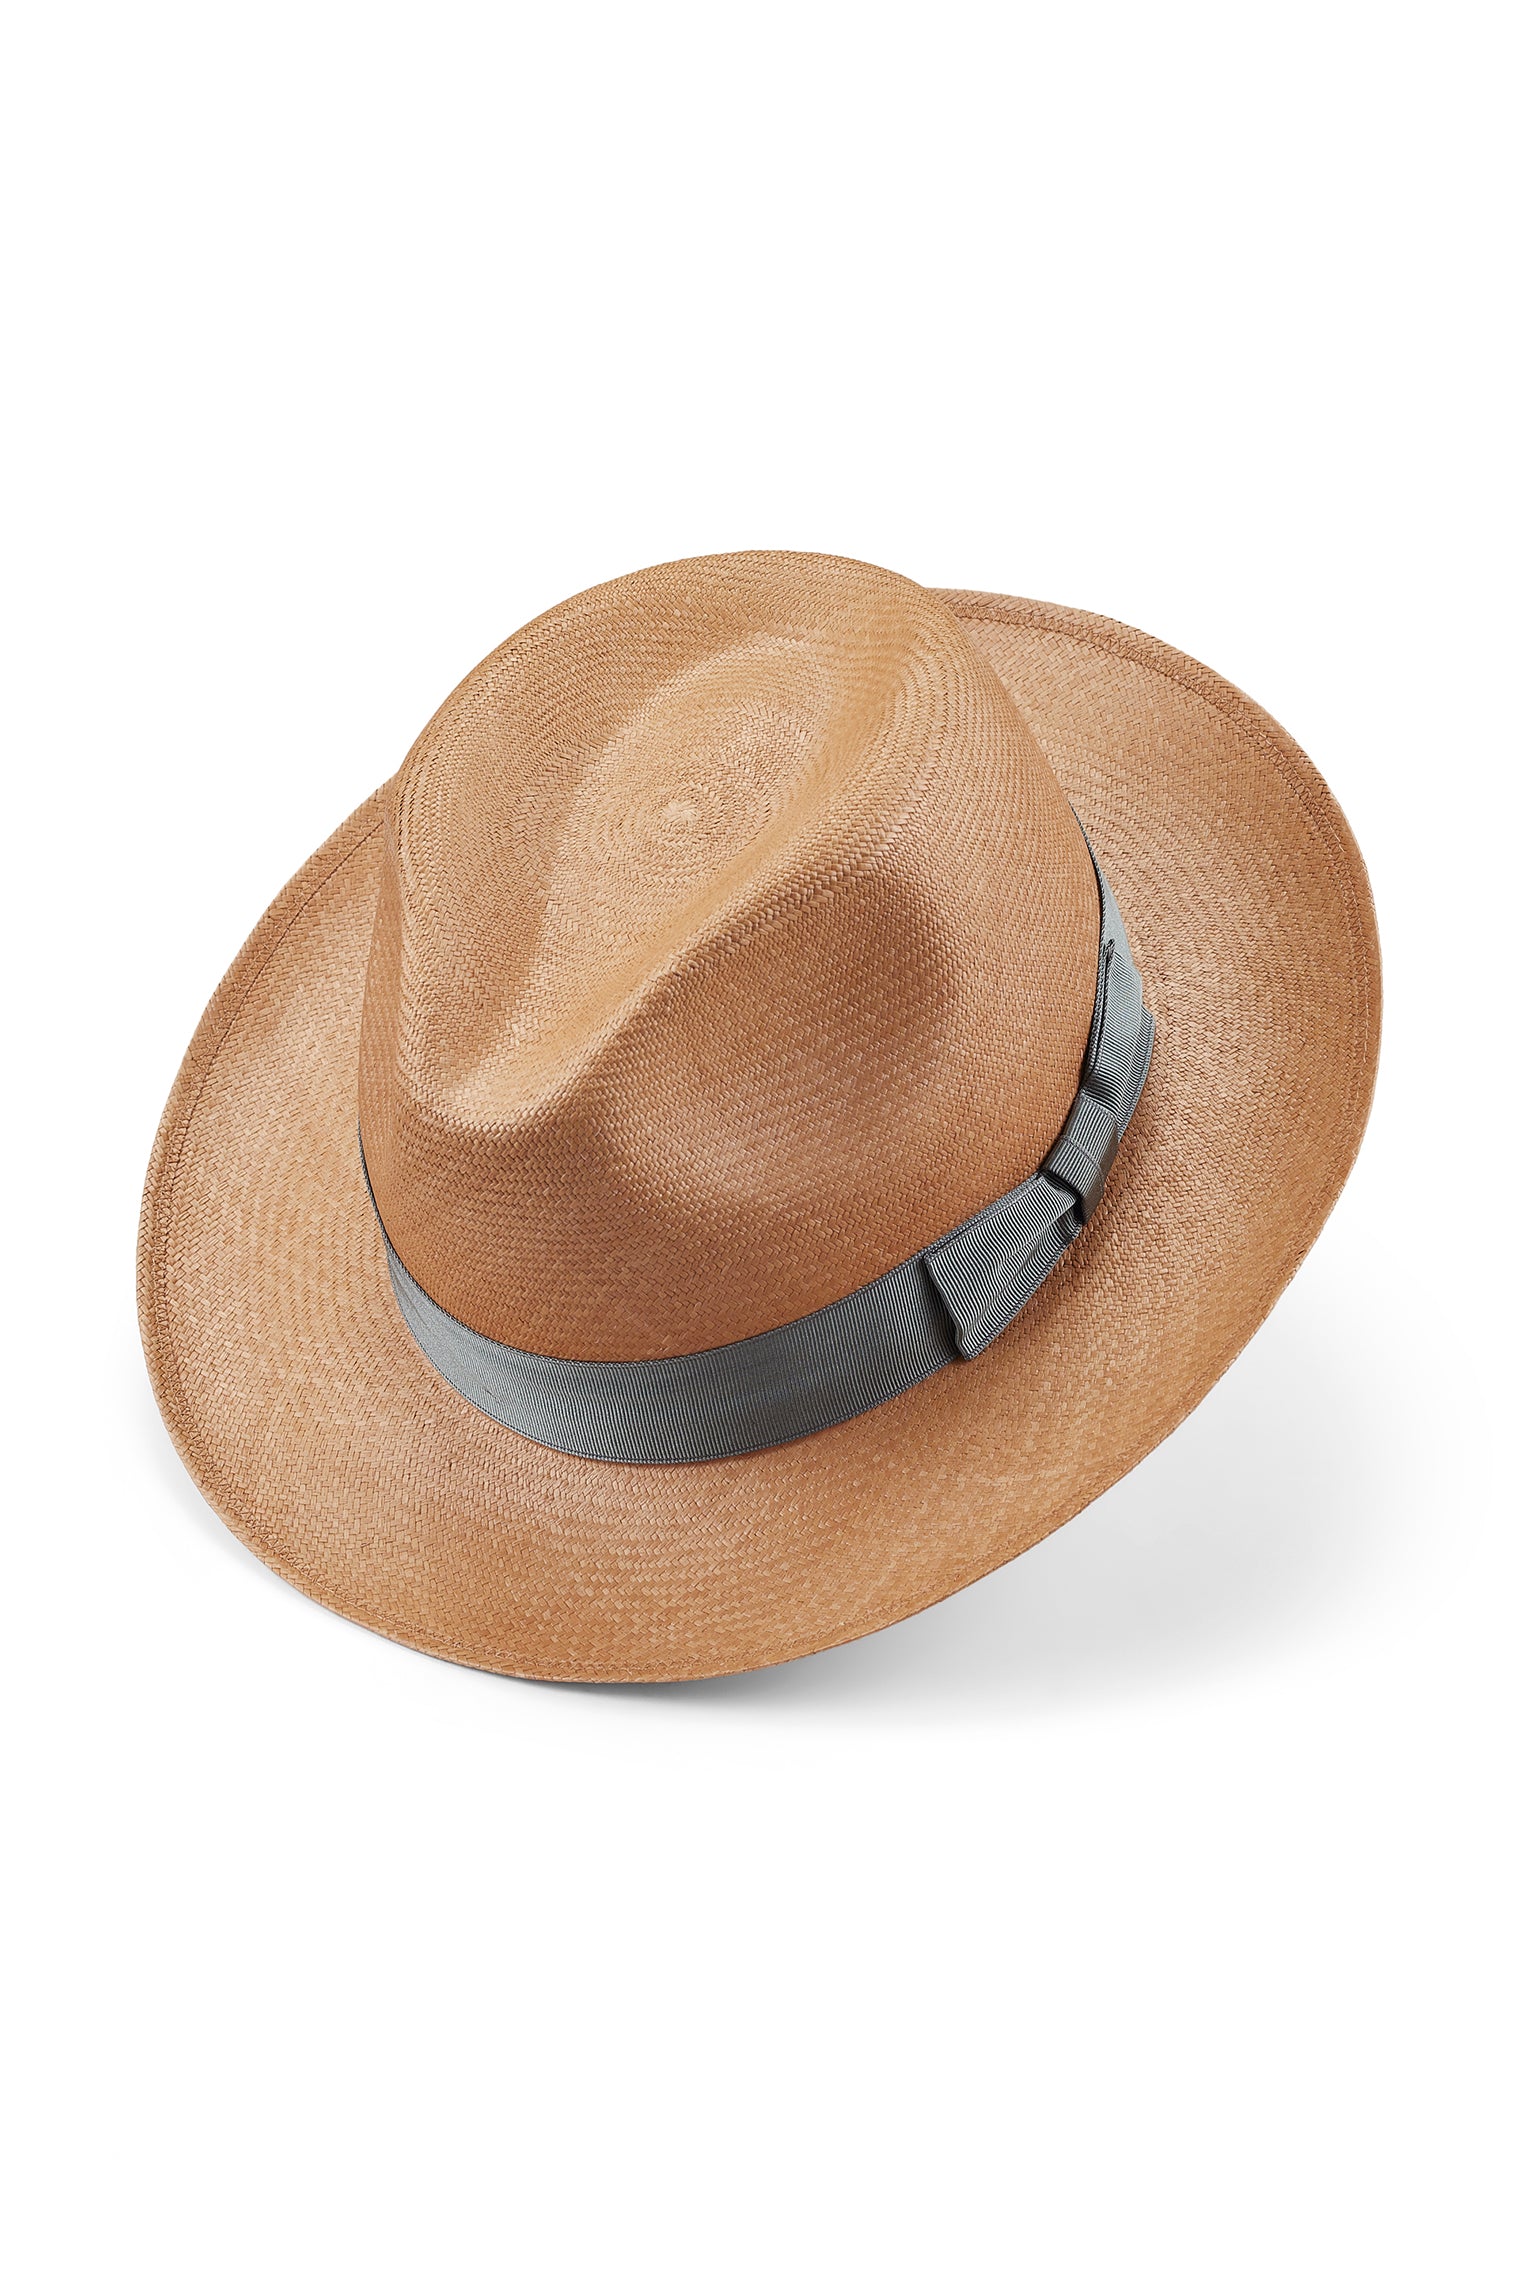 Fairbanks Mocha Panama - Panamas, Straw and Sun Hats for Men - Lock & Co. Hatters London UK